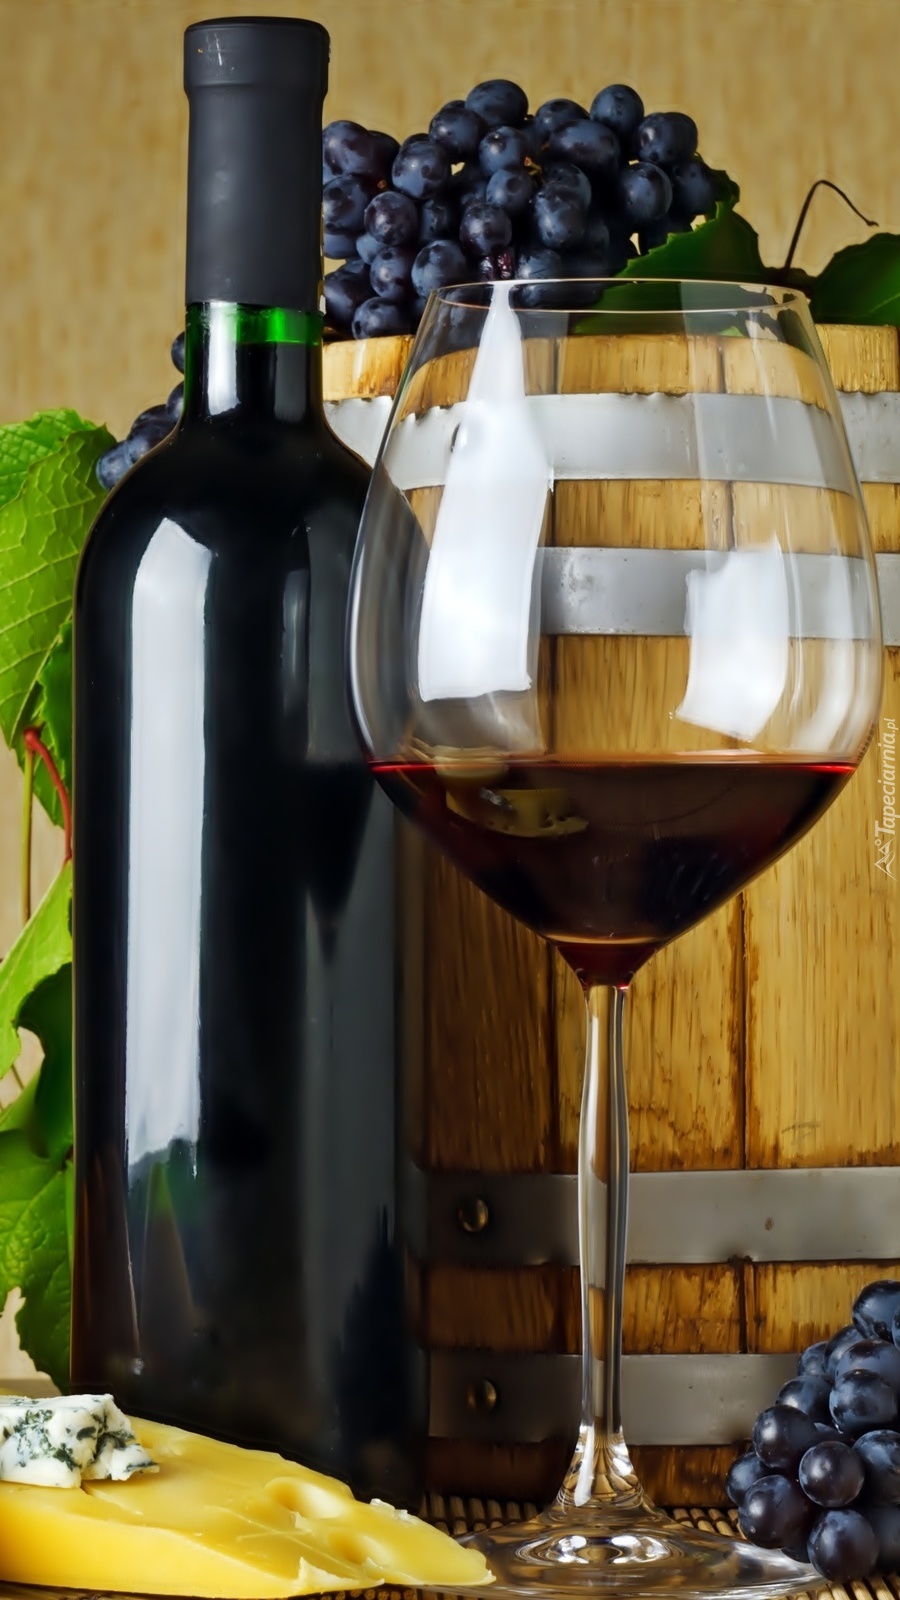 Beczka winogron obok lampki wina butelki i sera